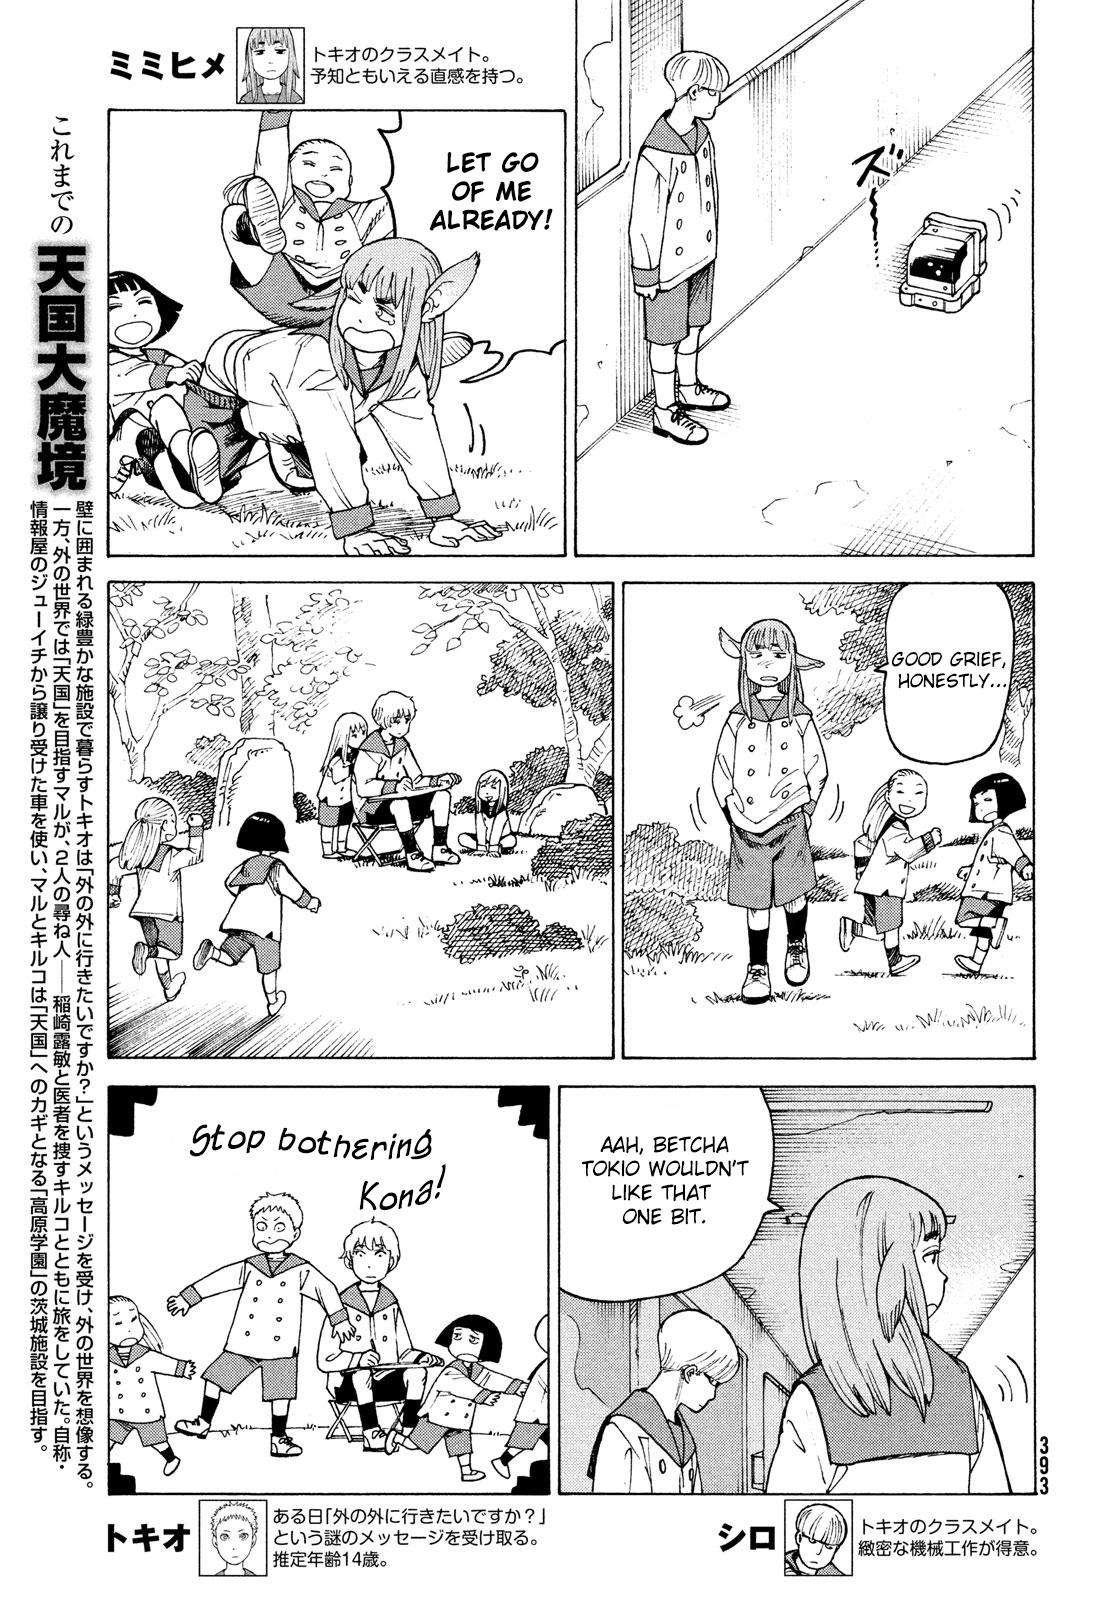 Heavenly Delusion Manga by Masakazu Ishiguro Volume 1-4 English Version  Comic